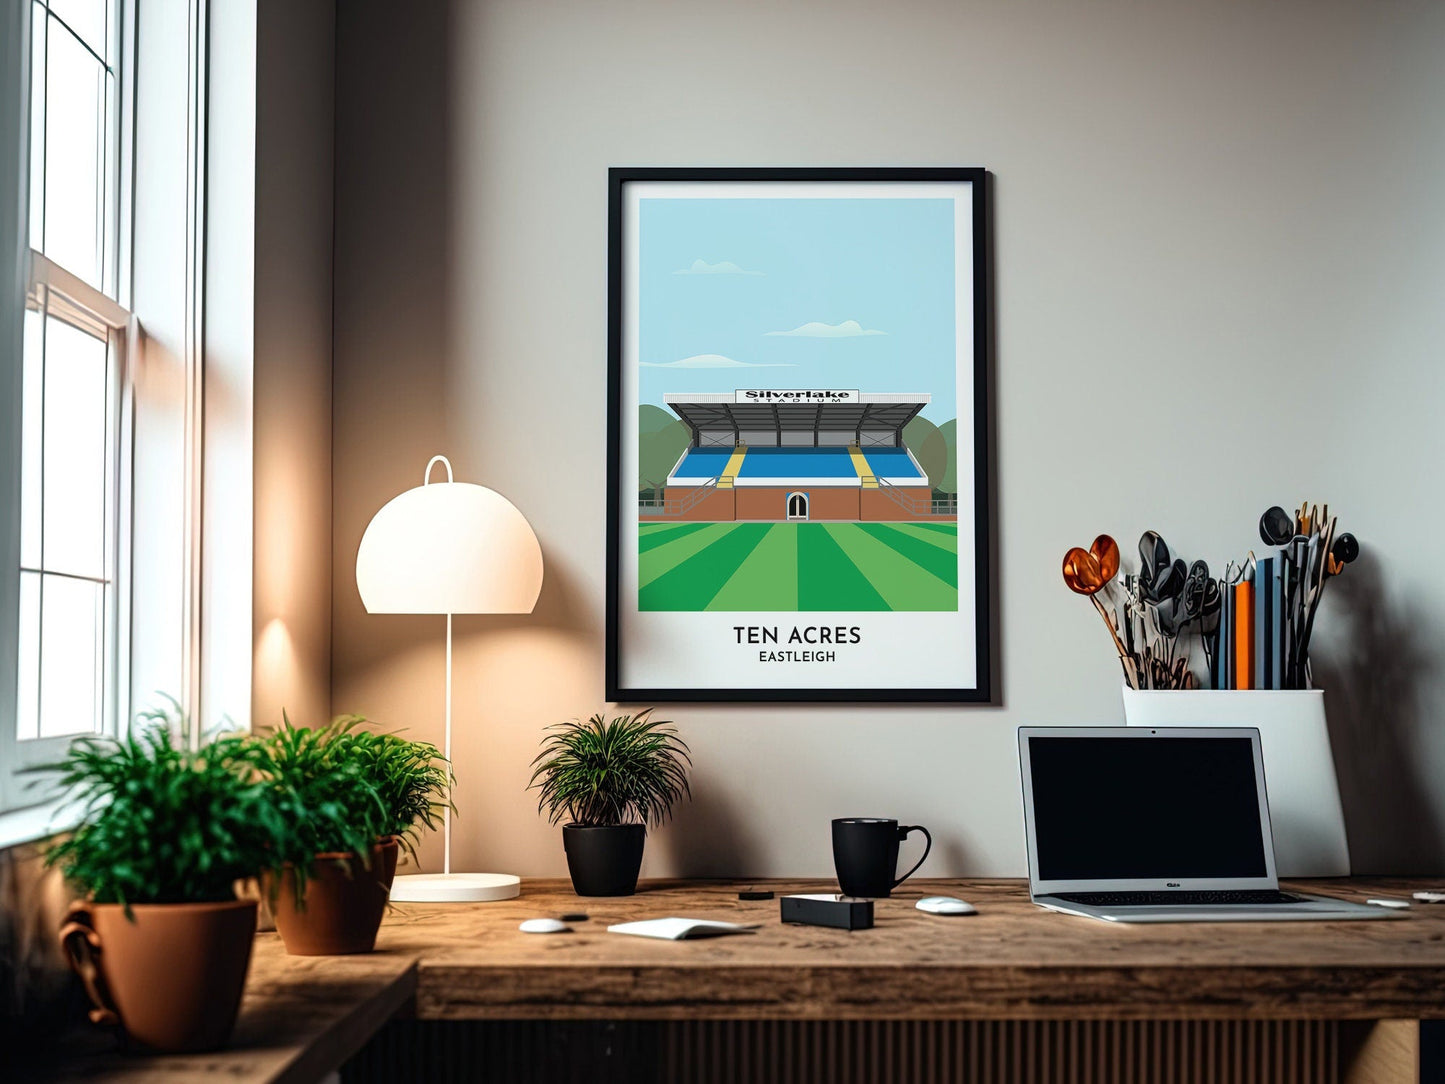 Eastleigh Football Stadium Poster, Illustration of Ten Acres / Silverlake Stadium, Football Fan Presents for Her or Him - Turf Football Art